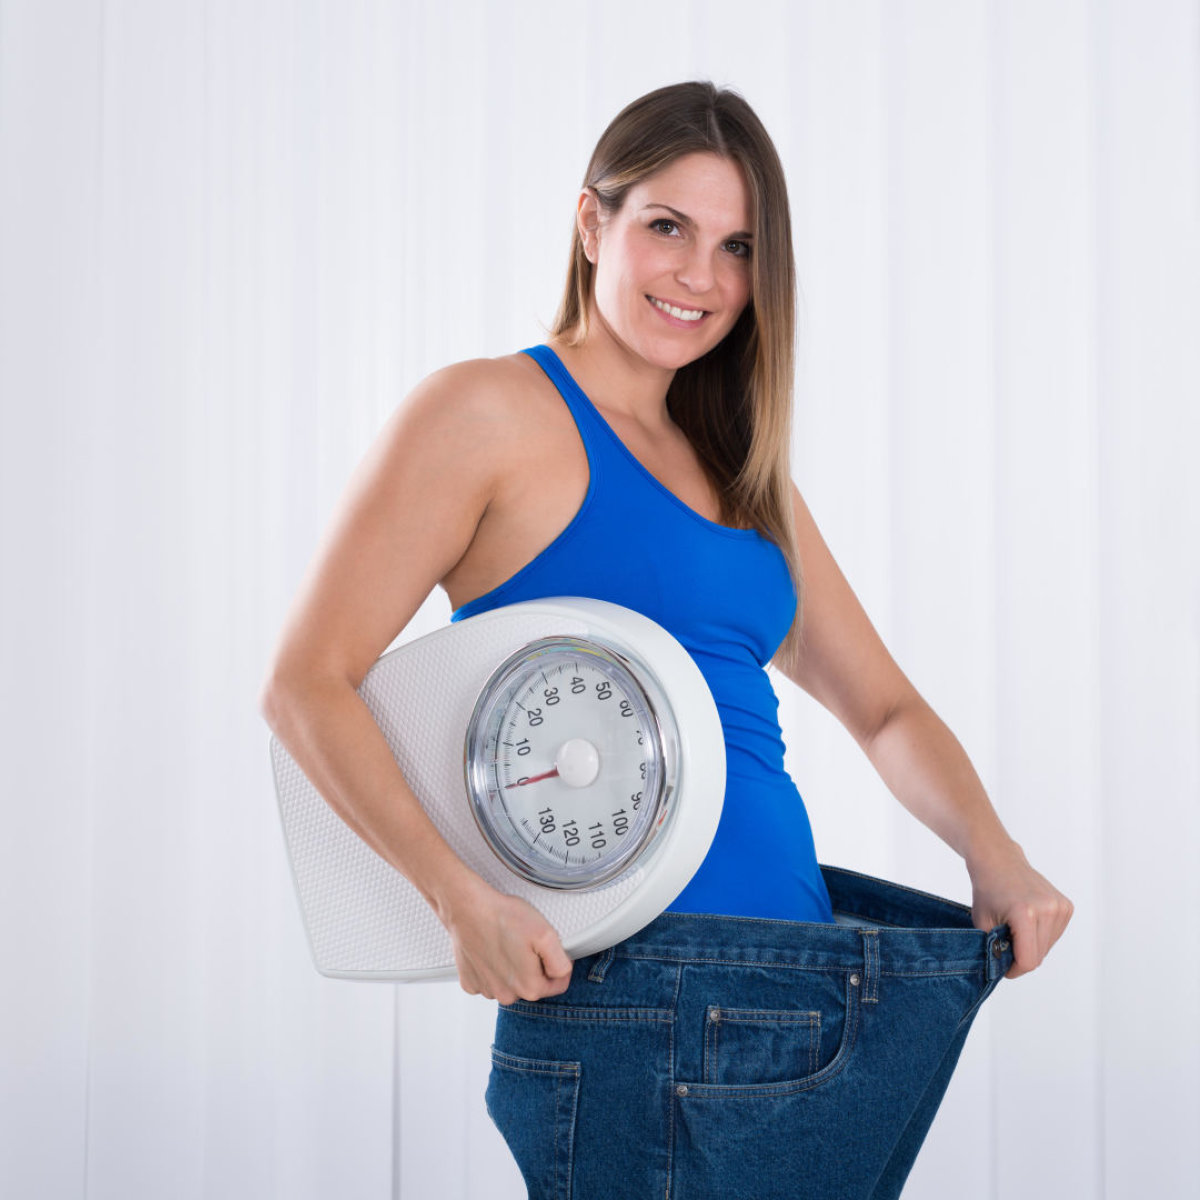 endometriozei sunku numesti svorio